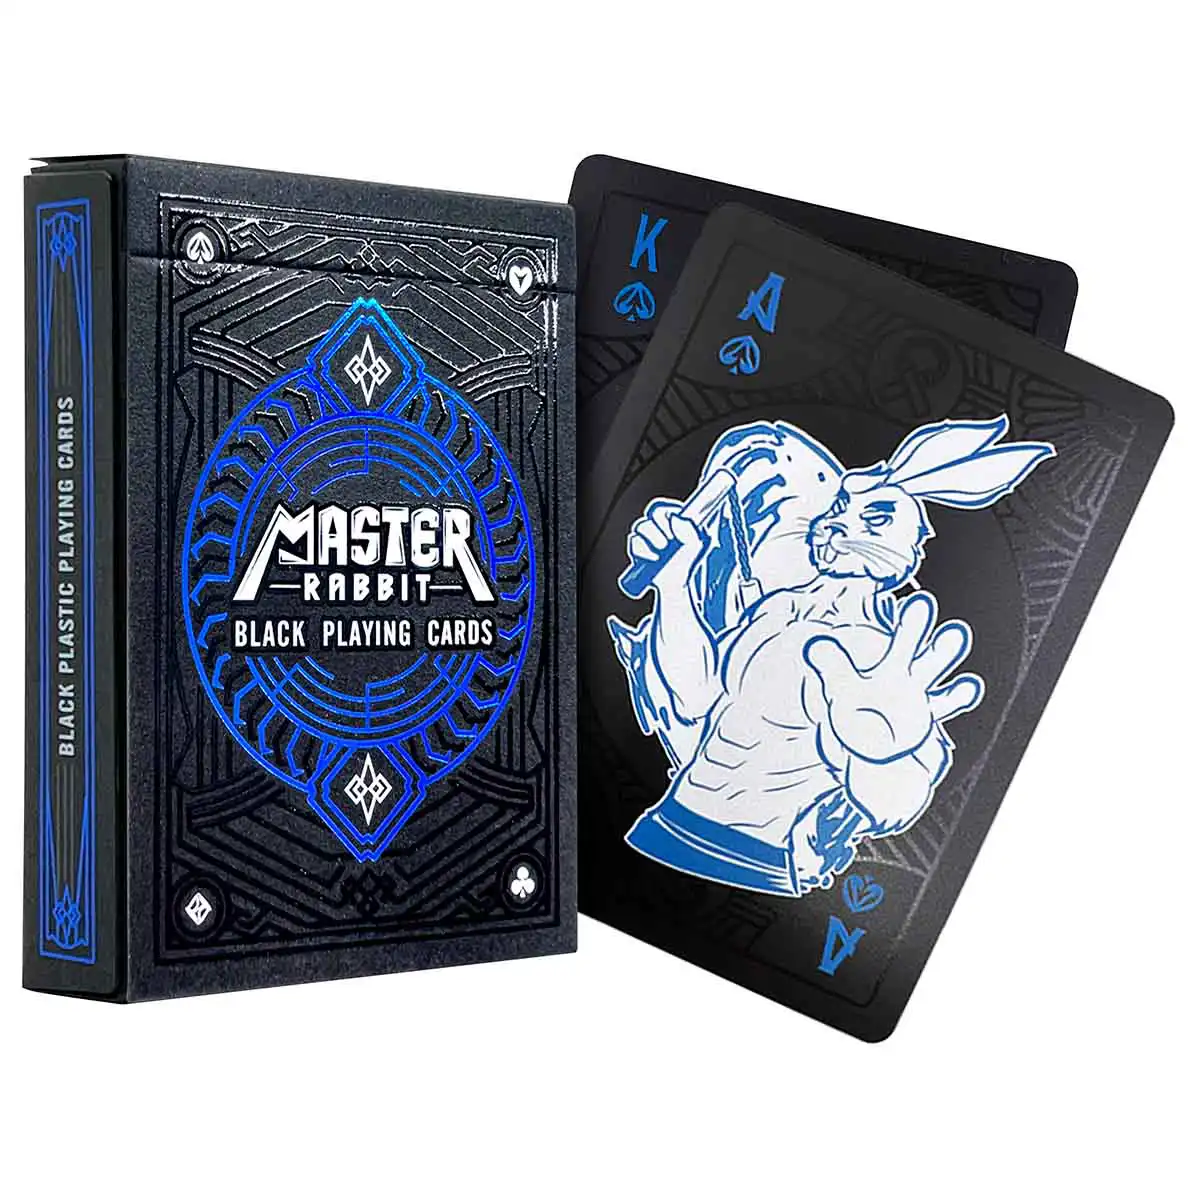 Master Rabbit Black Playing Cards